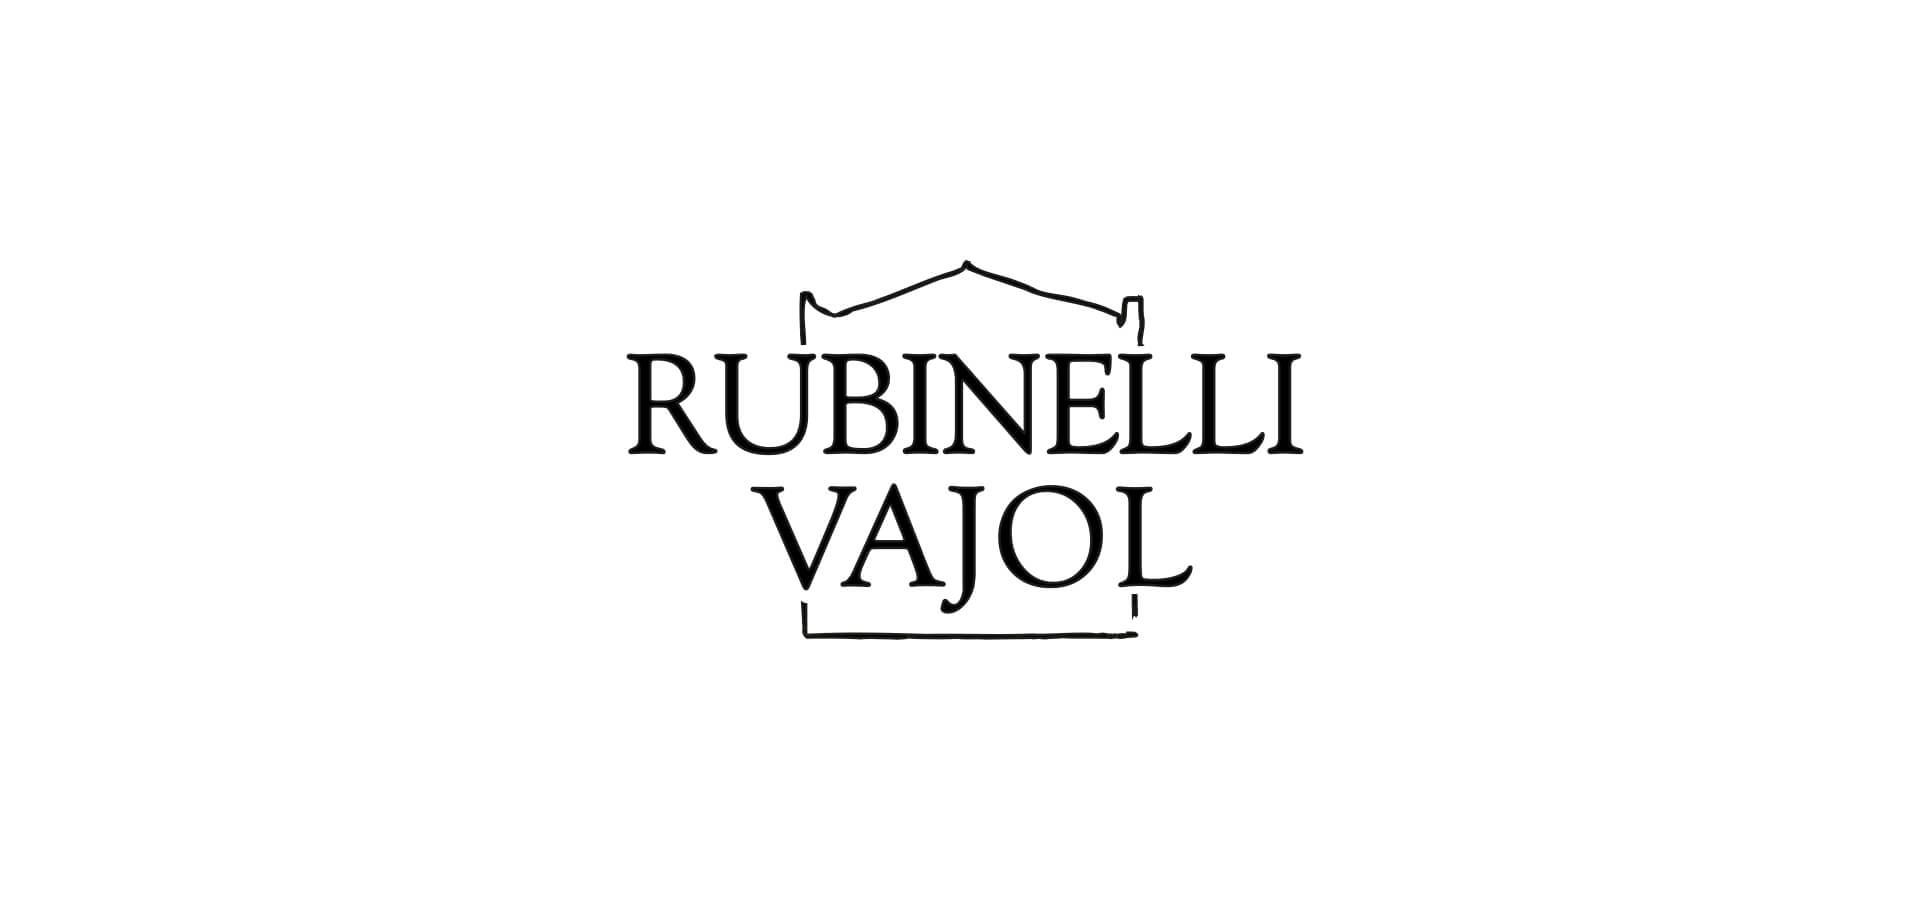 Rubinelli Vajol, Verona, Italien